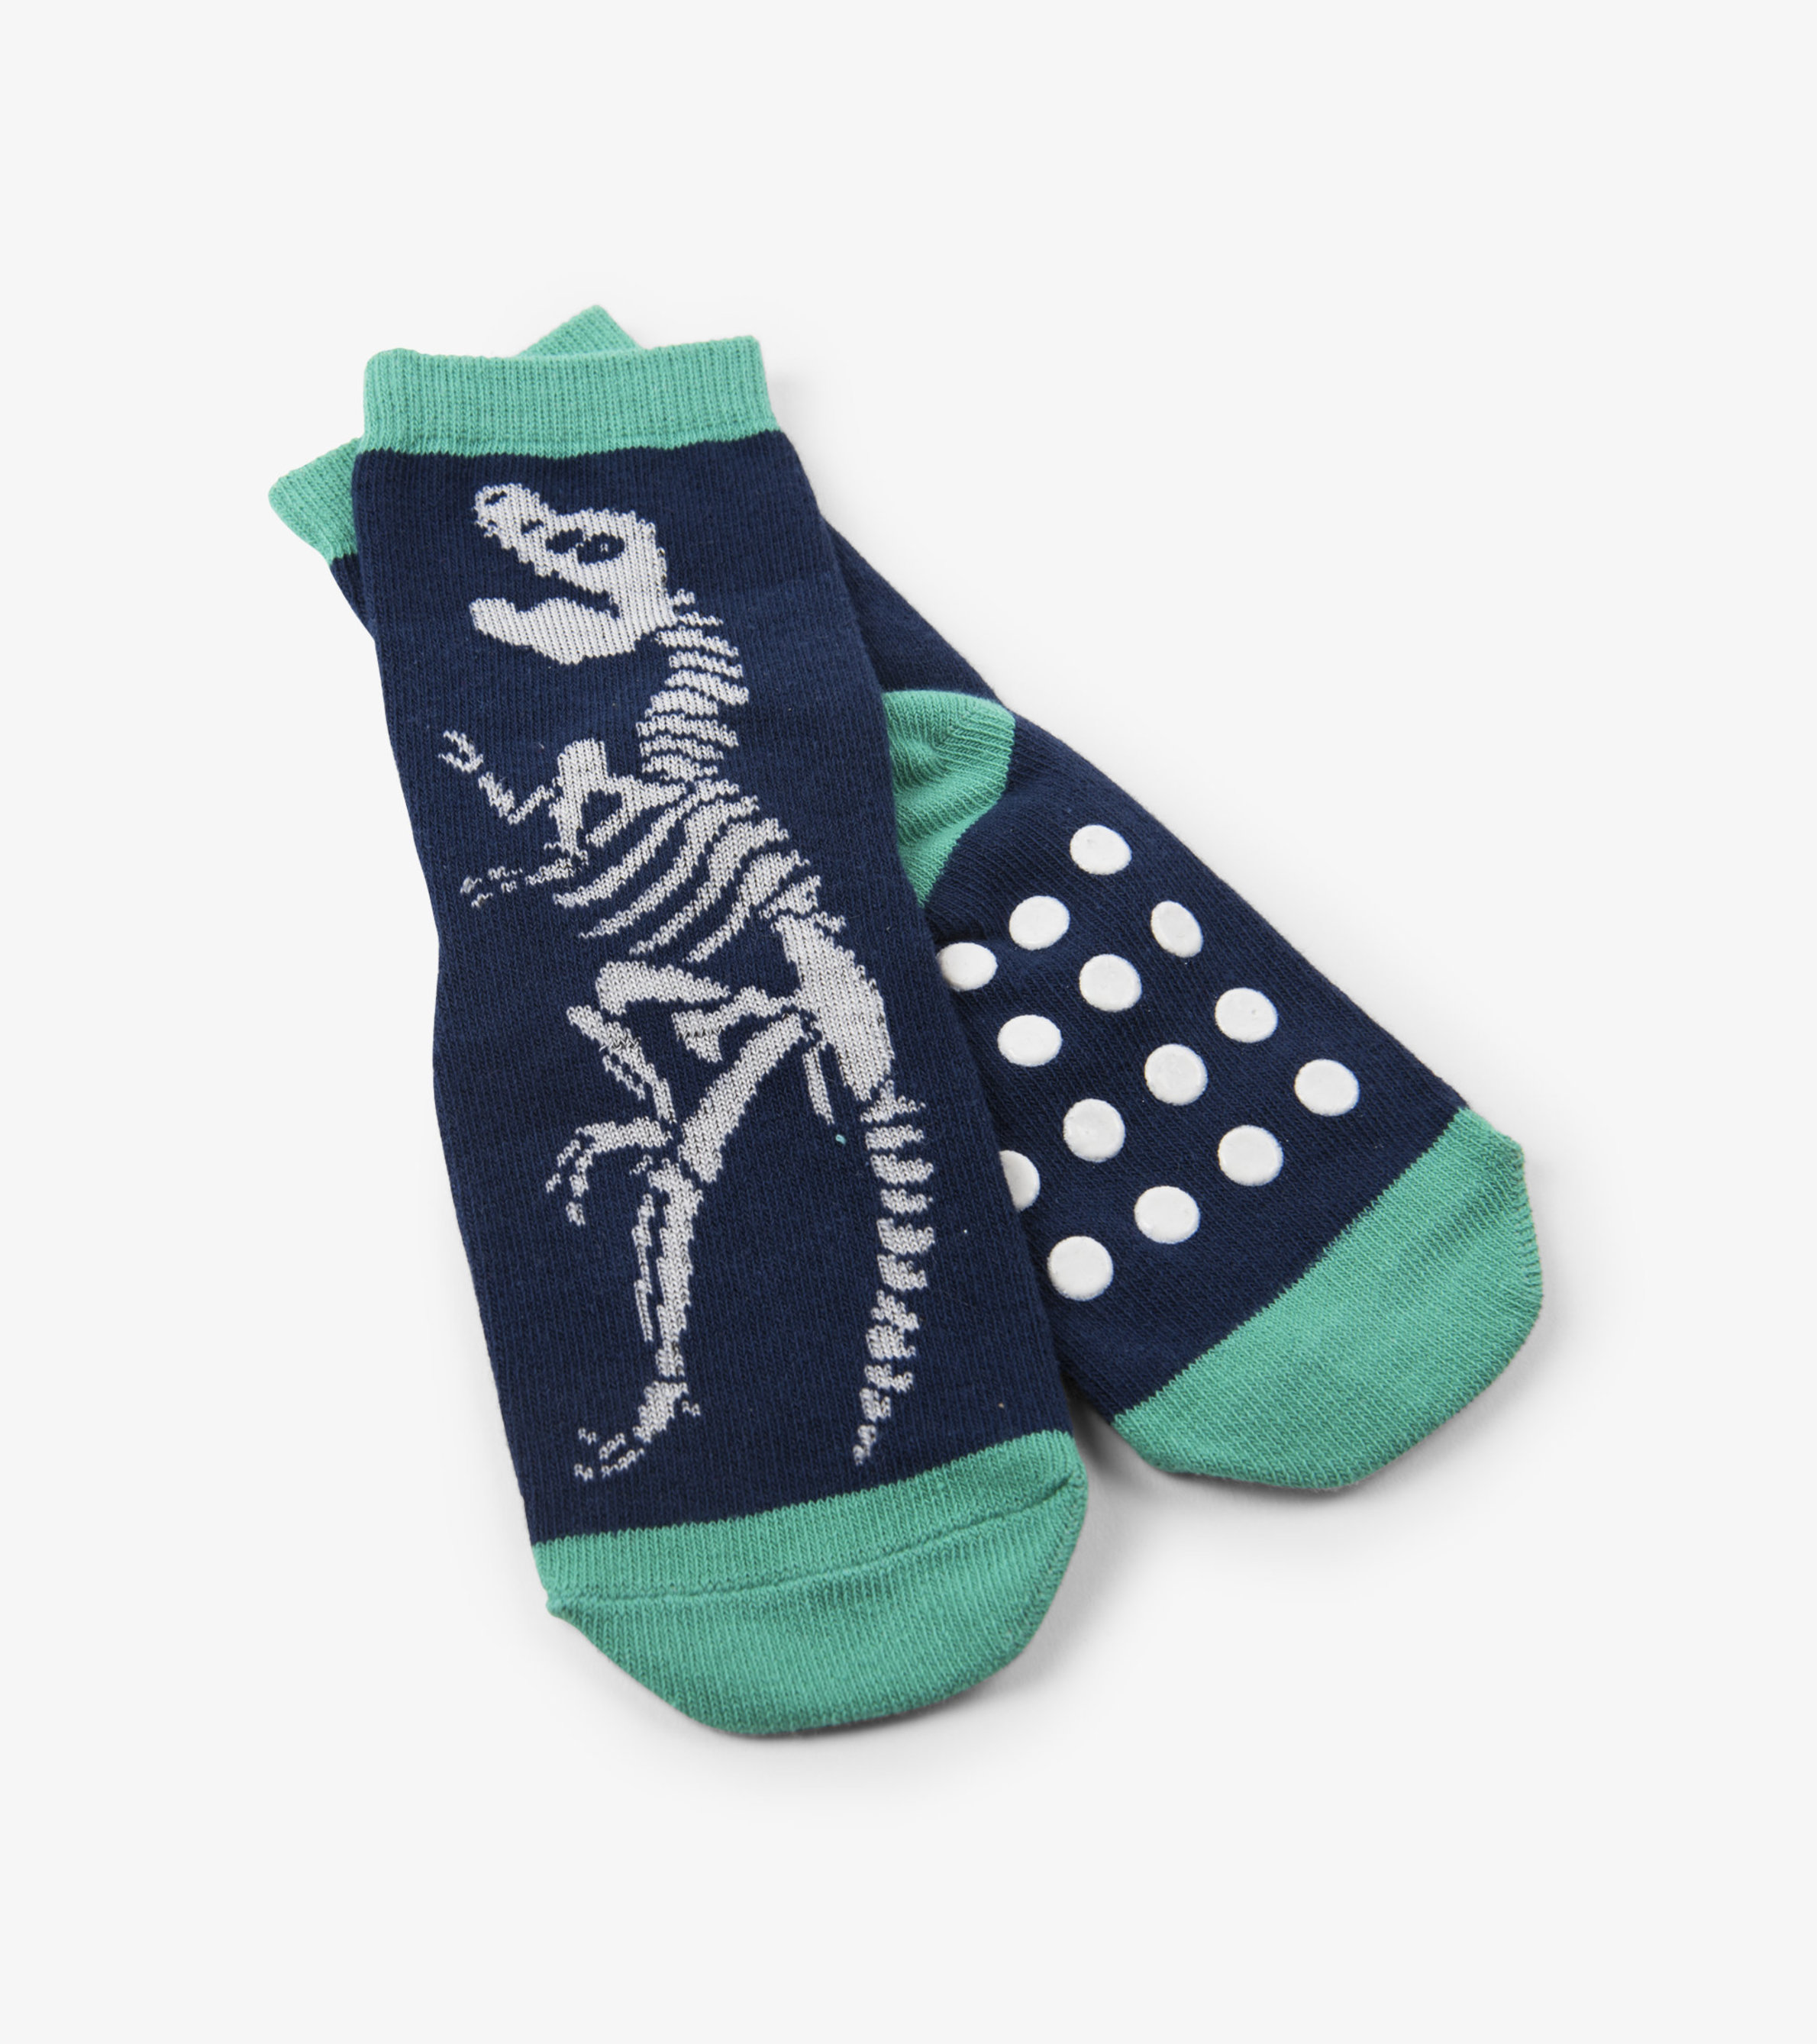 Hatley Glow Dinosaur Socks Navy - Kids | Blue